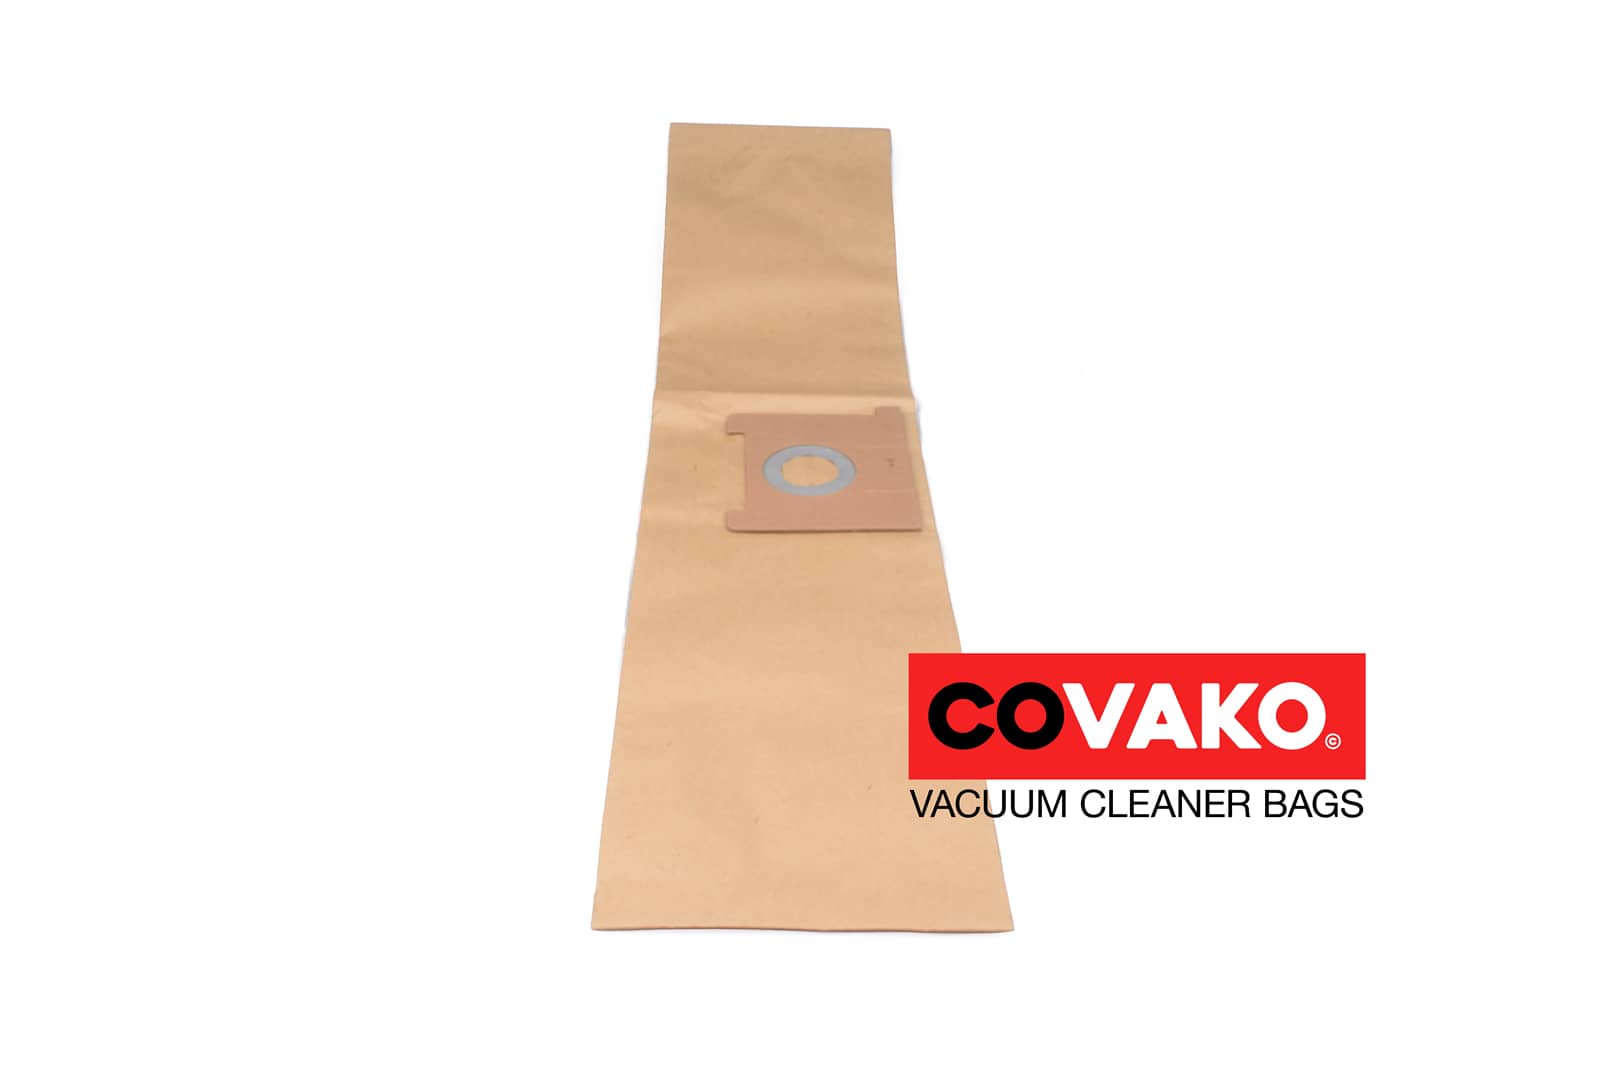 Clean a la Card Compacto 9 / Paper - Clean a la Card vacuum cleaner bags